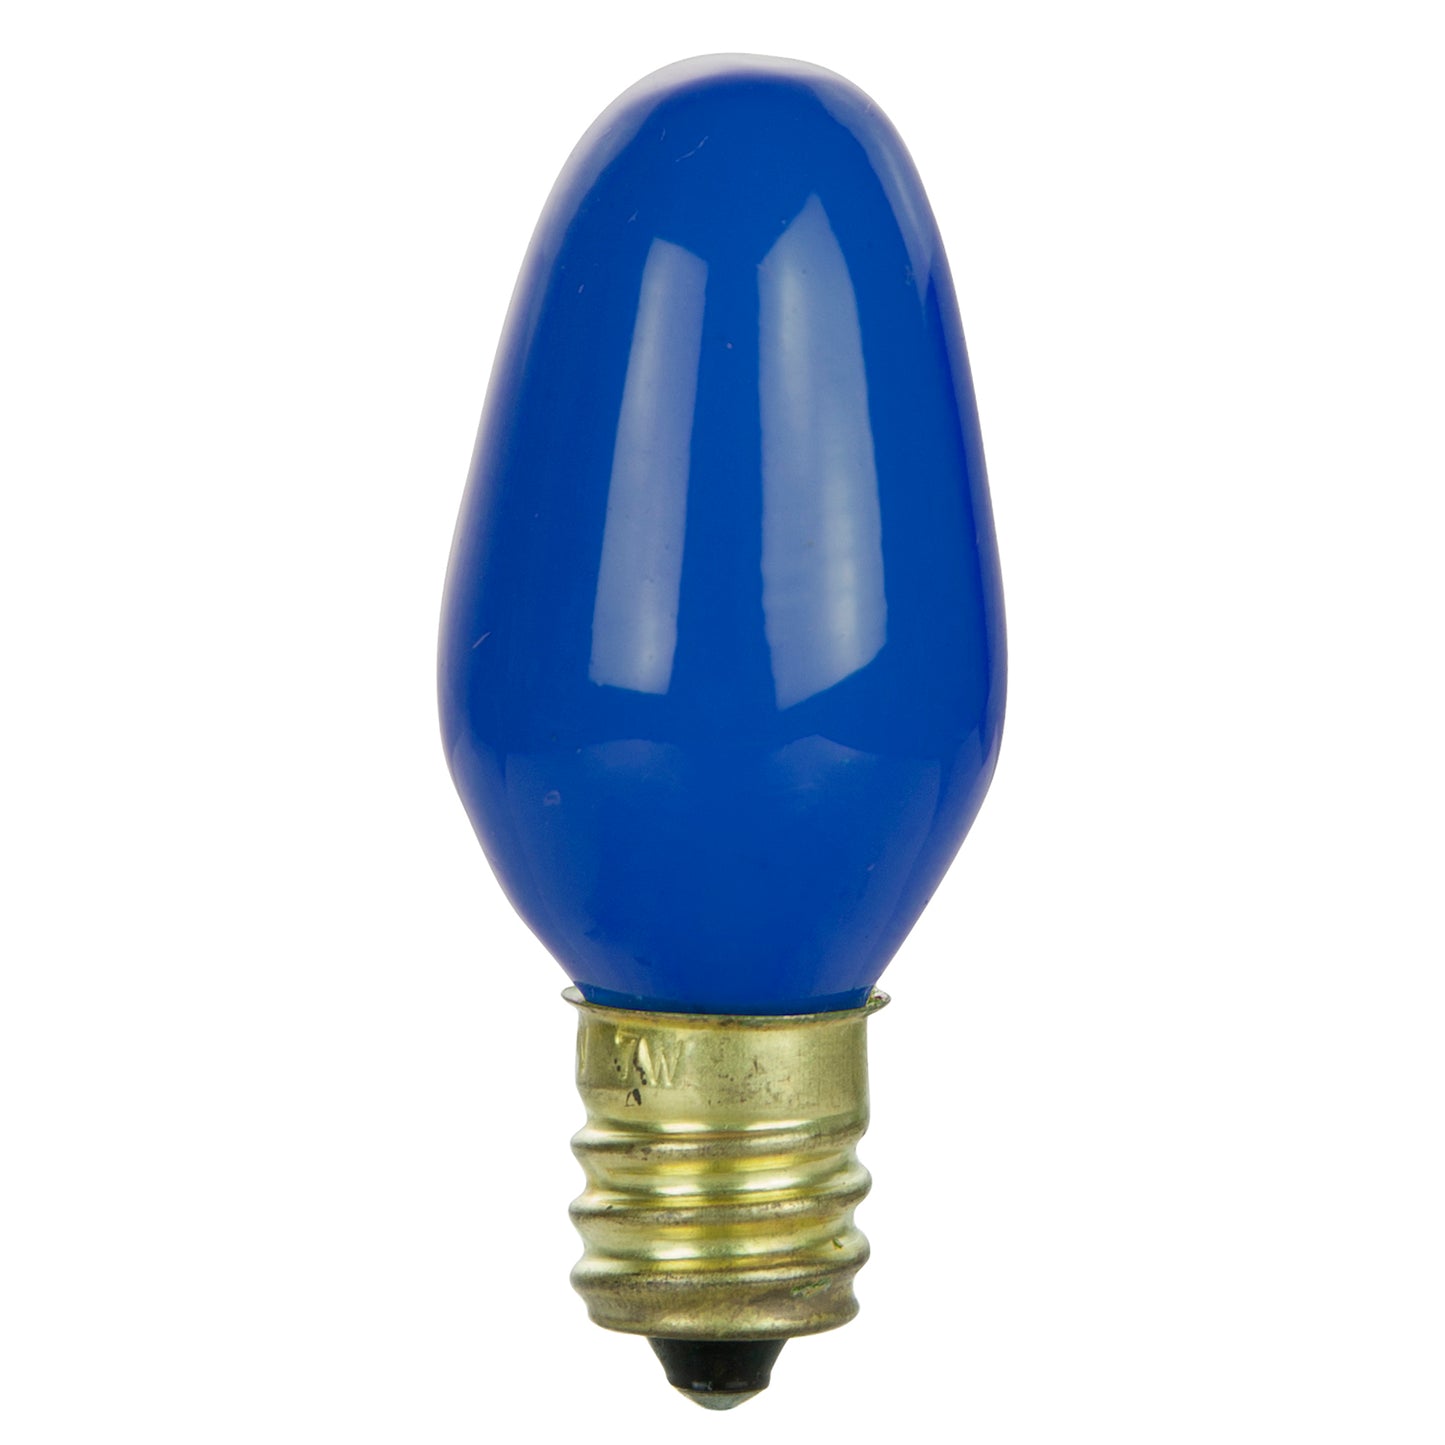 Sunlite 01053 7C7 Incandescent Bulb, 7 Watt, Candelabra E12 Base, C7 Small Night Light, Colored Bulb, Blue, 12 Count